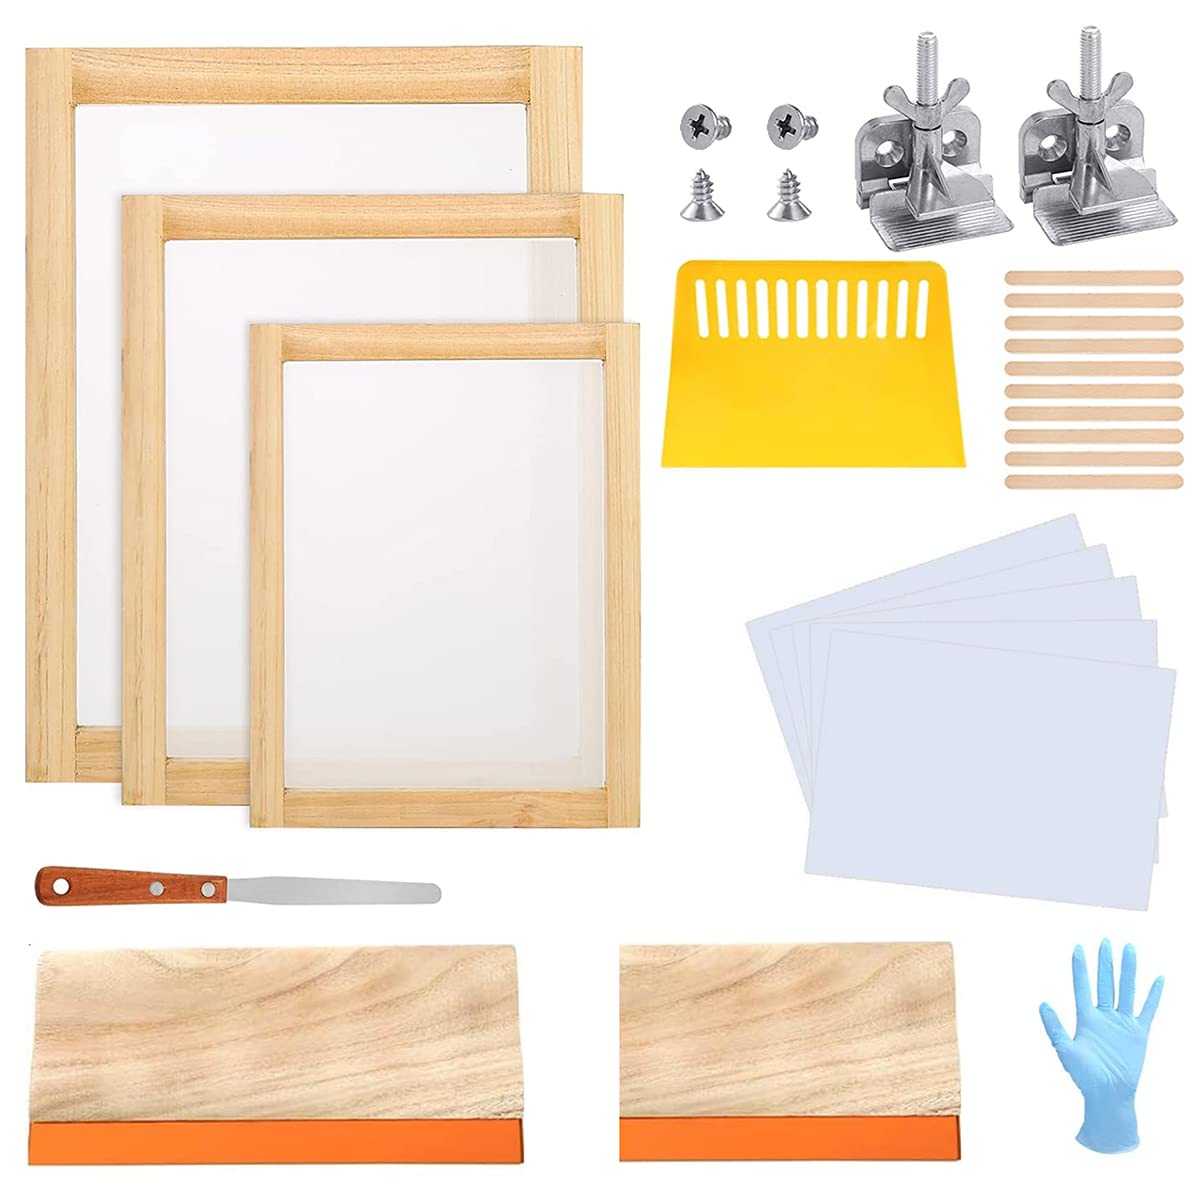 Colovis 23 Pcs Screen Printing Starter Kit, Include 3 Sizes Wood